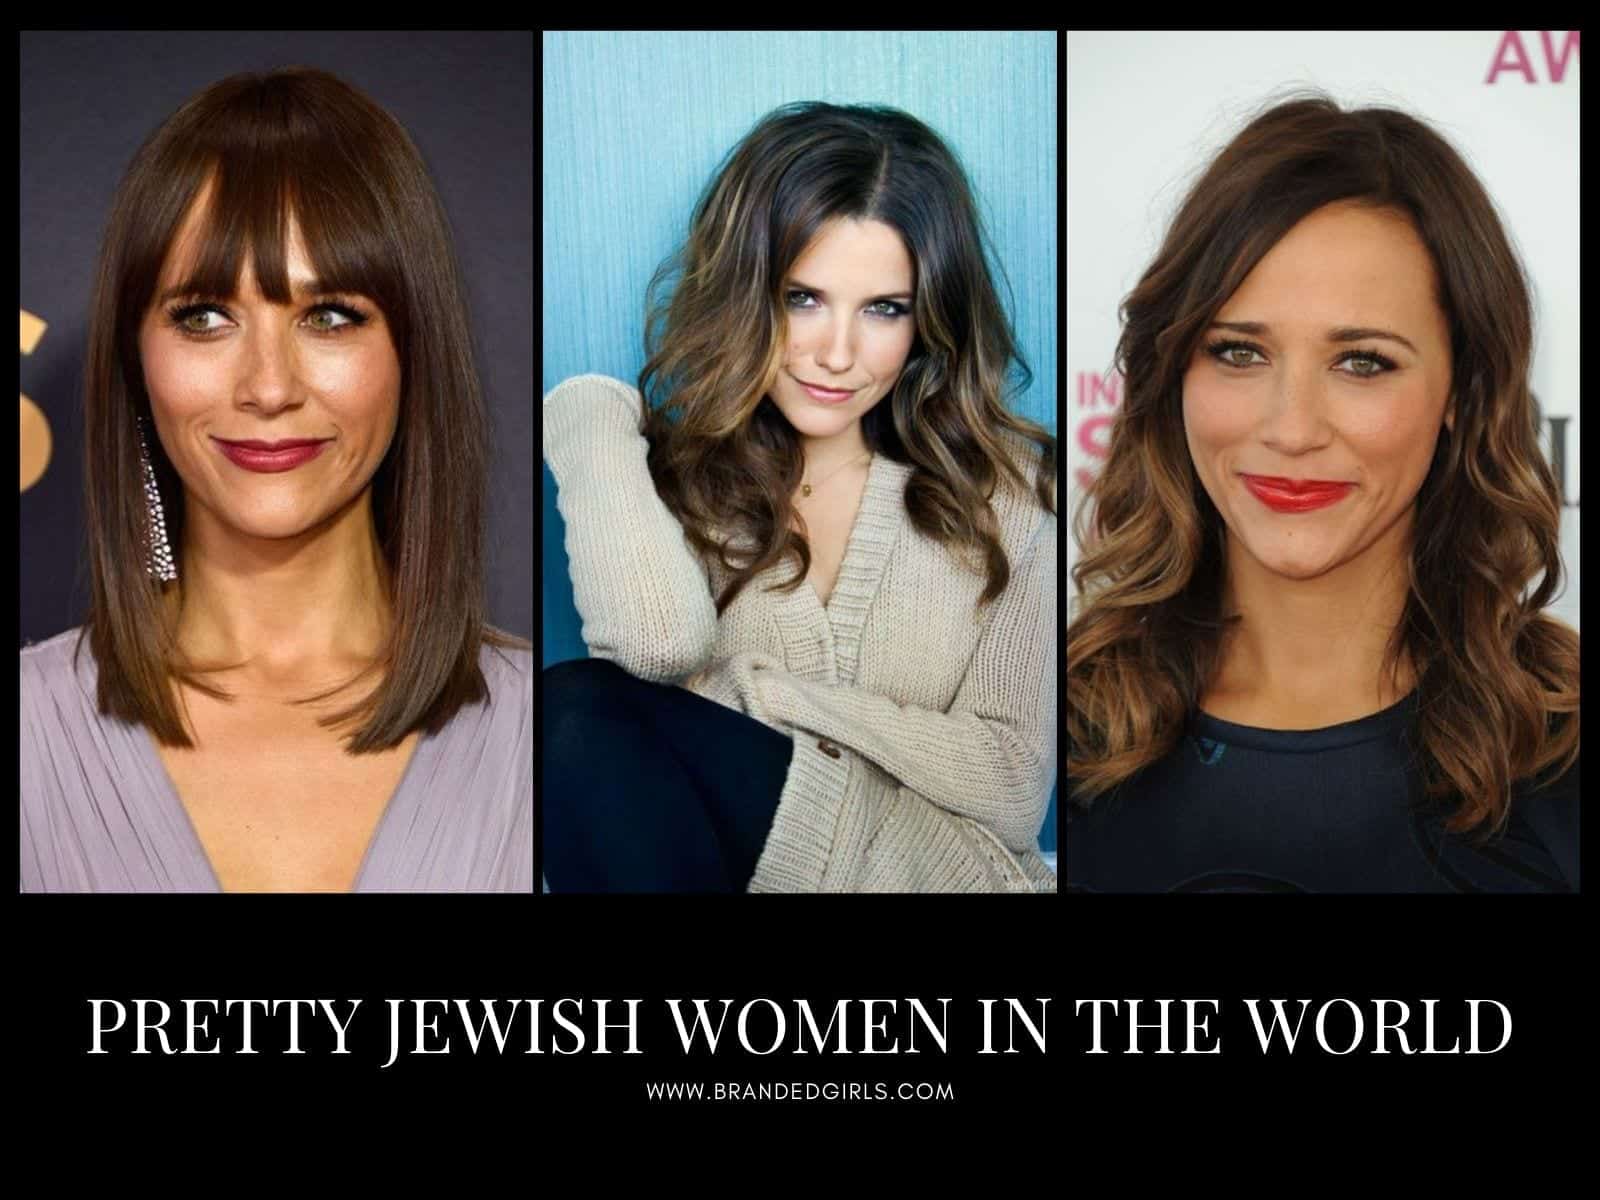 Cute Jewish Girls 30 Most Beautiful Jewish Women In The World